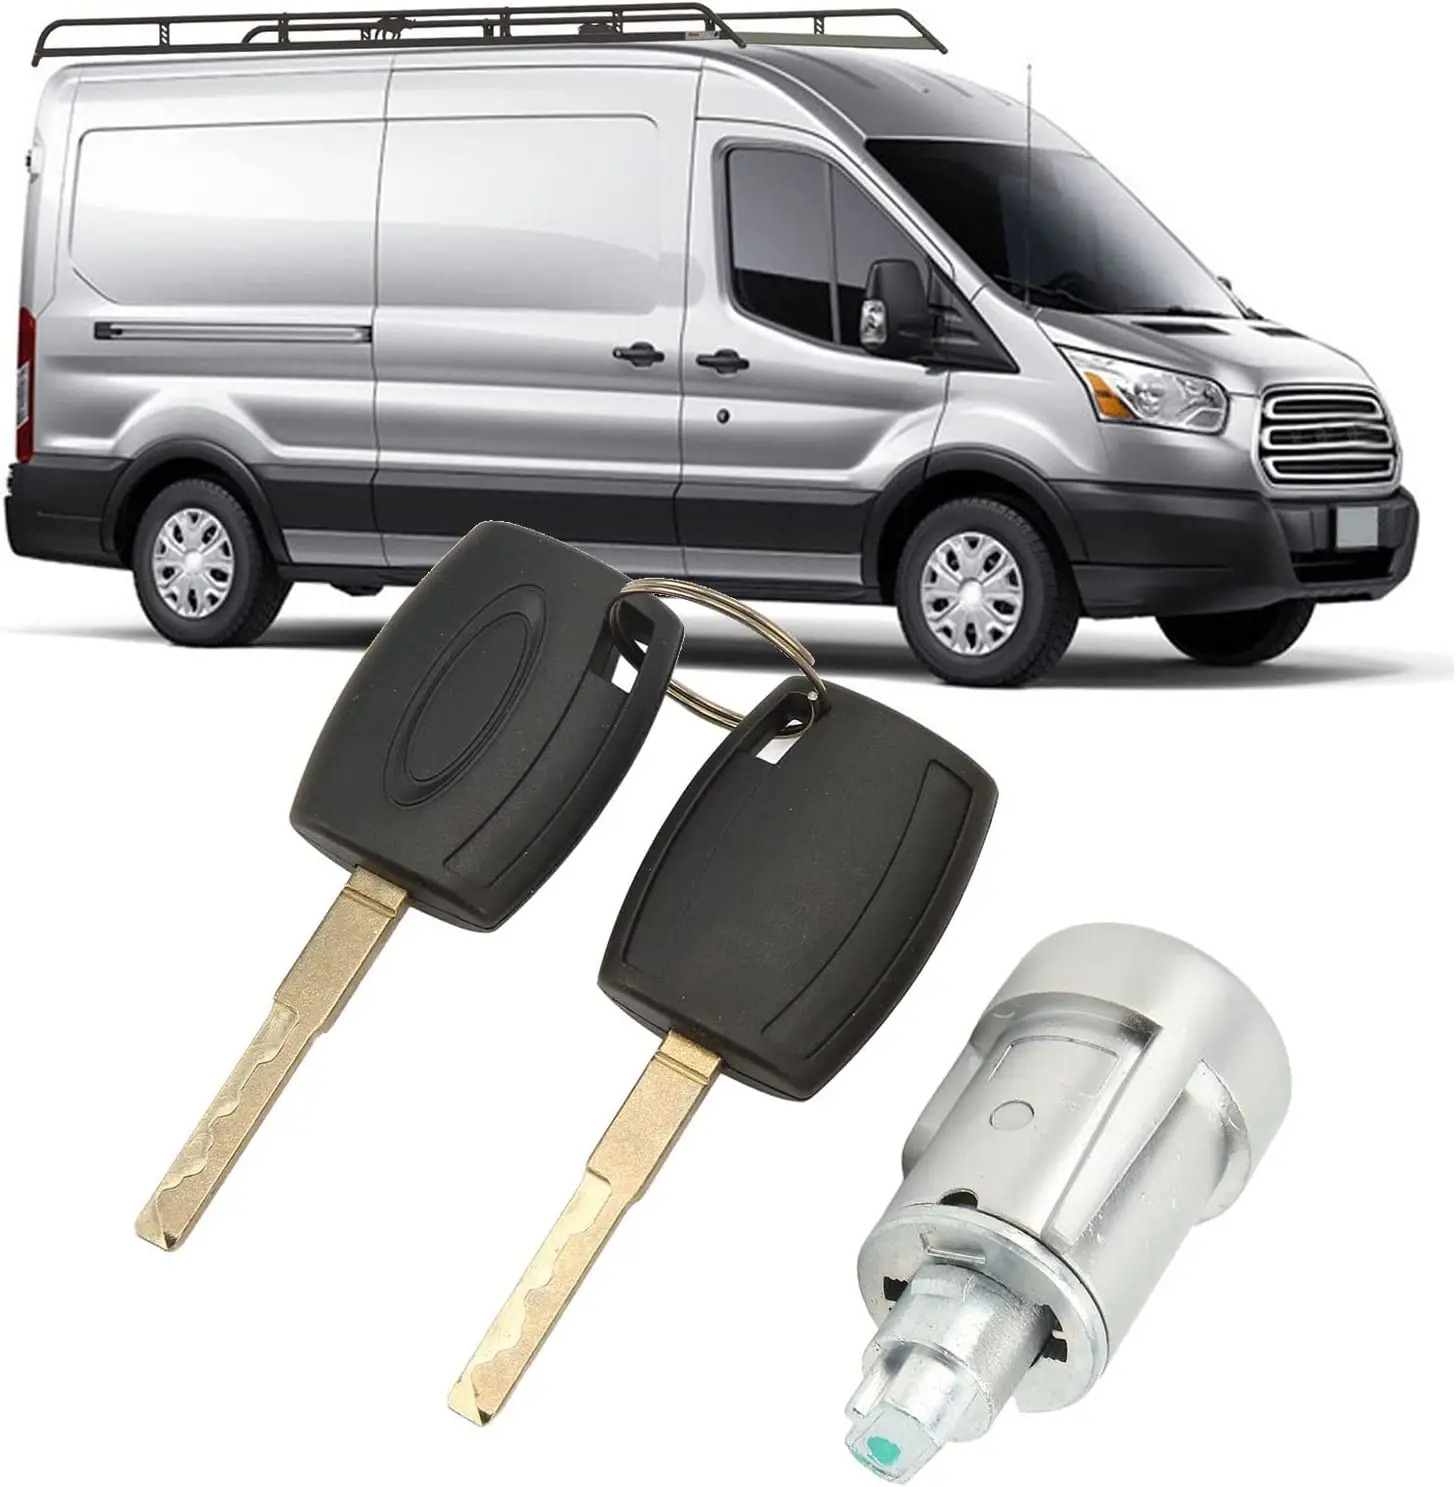 

Car Ignition Barrel Switch With 2 Keys 1926227 For Ford Transit MK8 2014-2019 Custom Tourneo Custom 2012-2019 Car Accessories